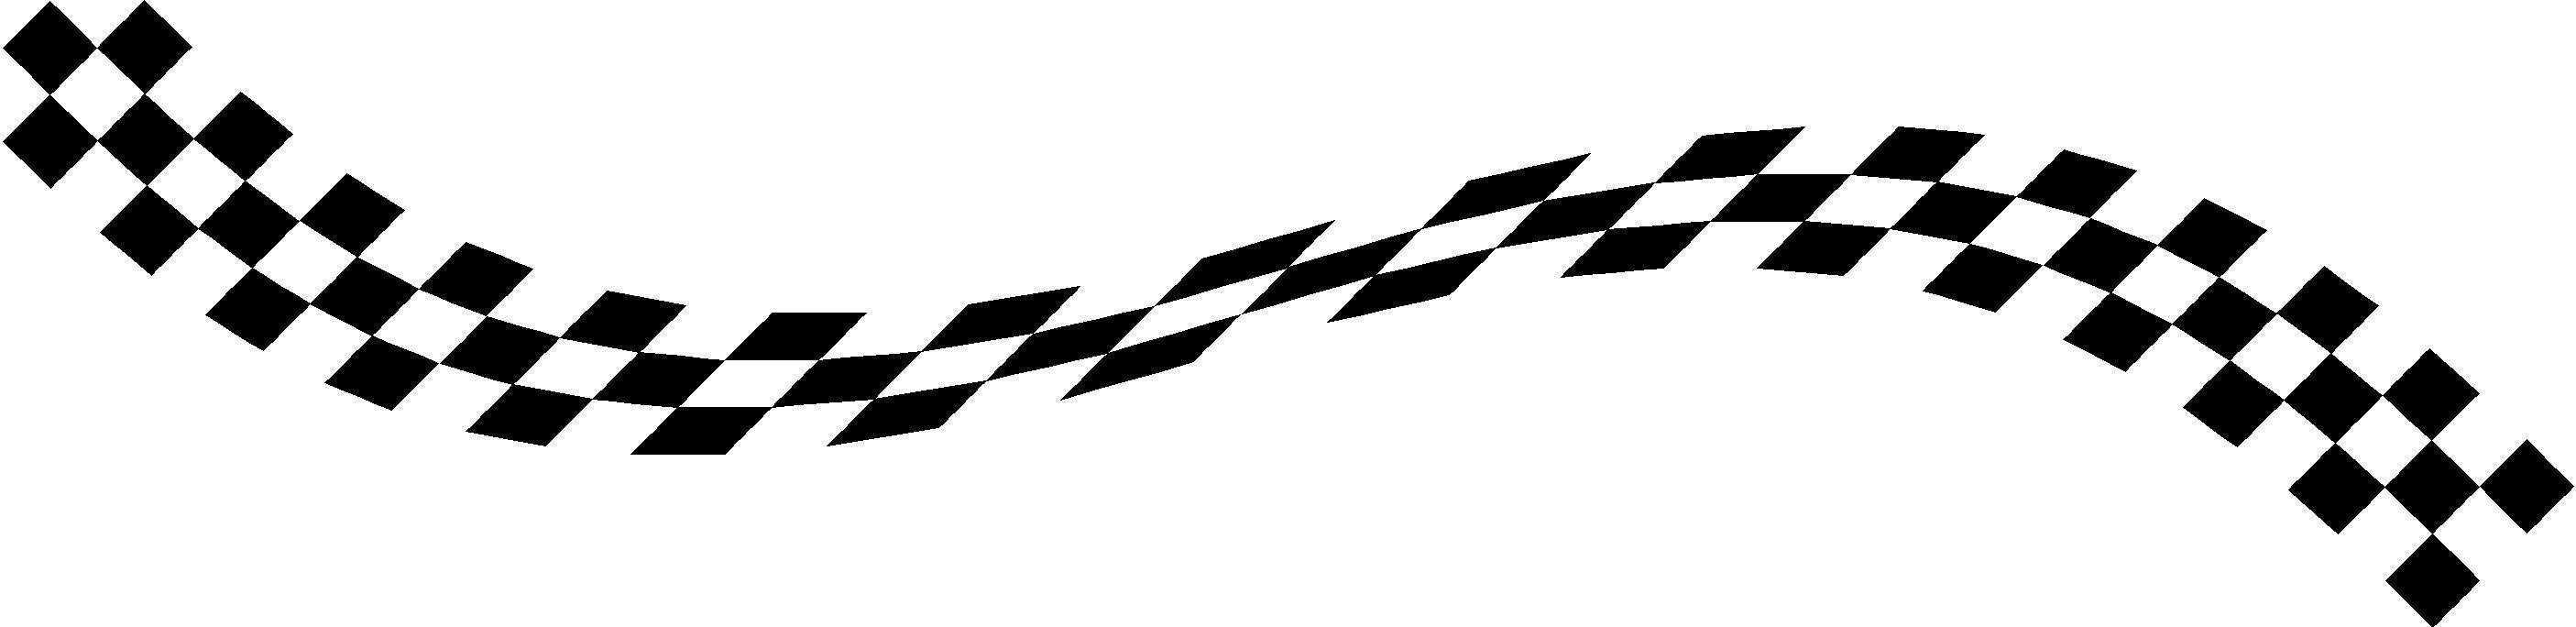 Checkered Flag Banner Clipart